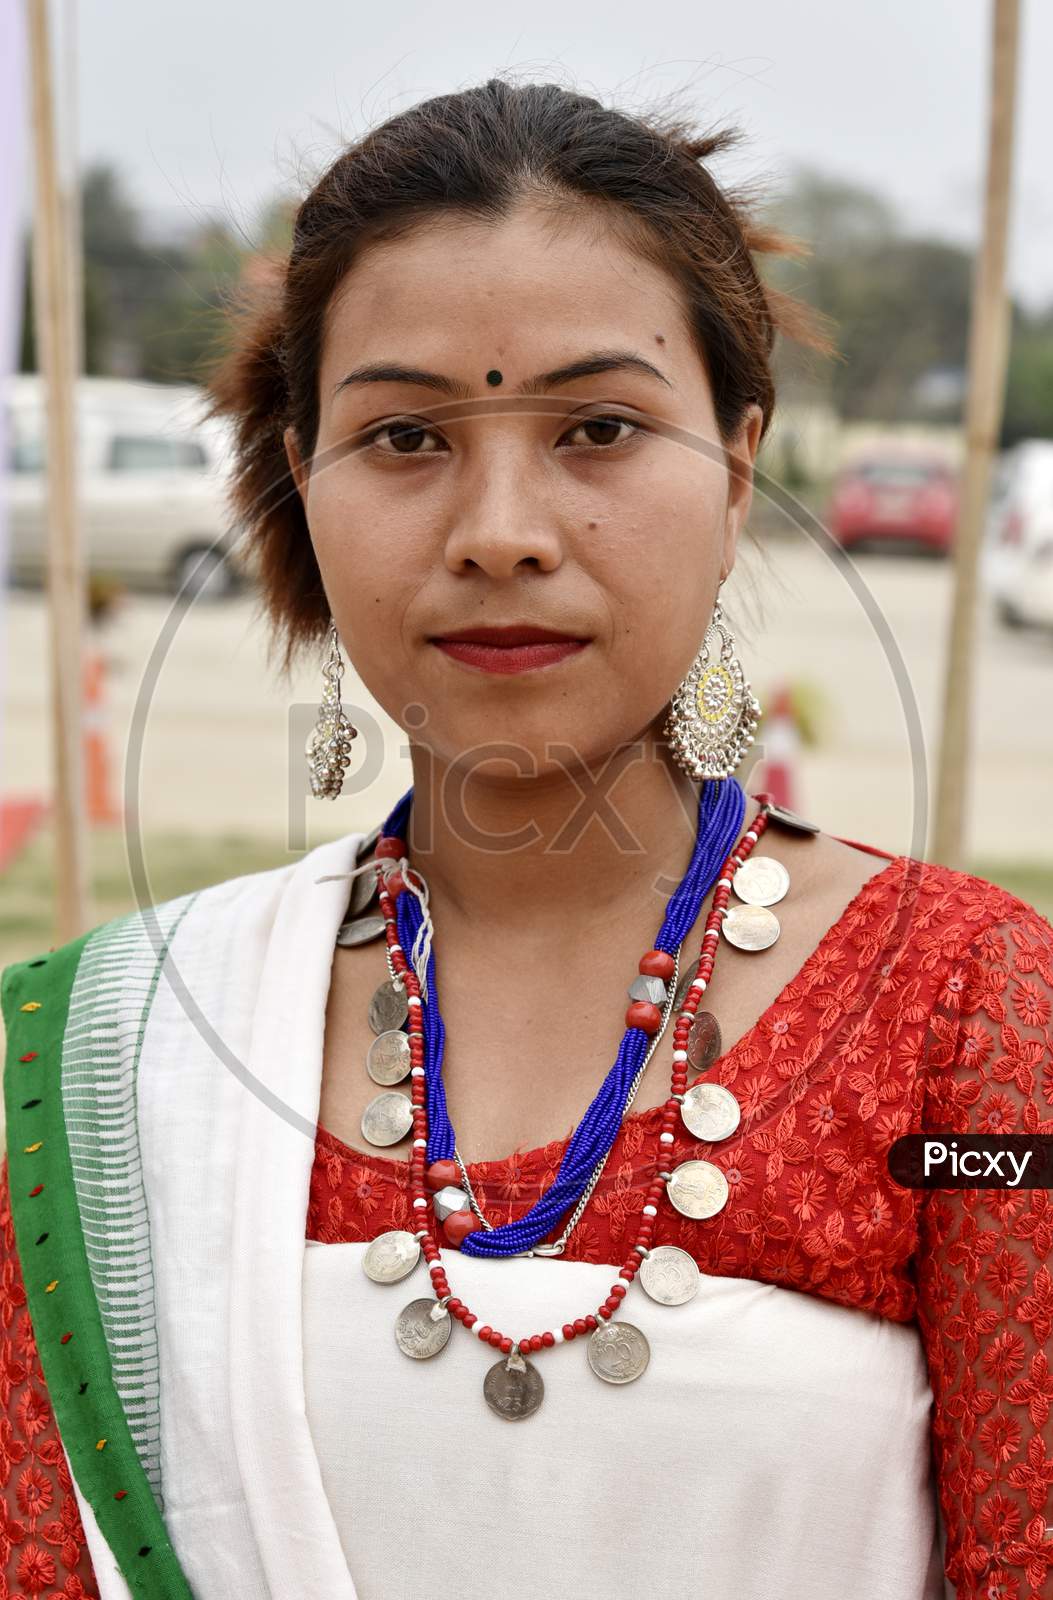 Assamese Woman In Traditional Tribal Dresses During Bihu Festival Celebrations in Guwahati, Assam